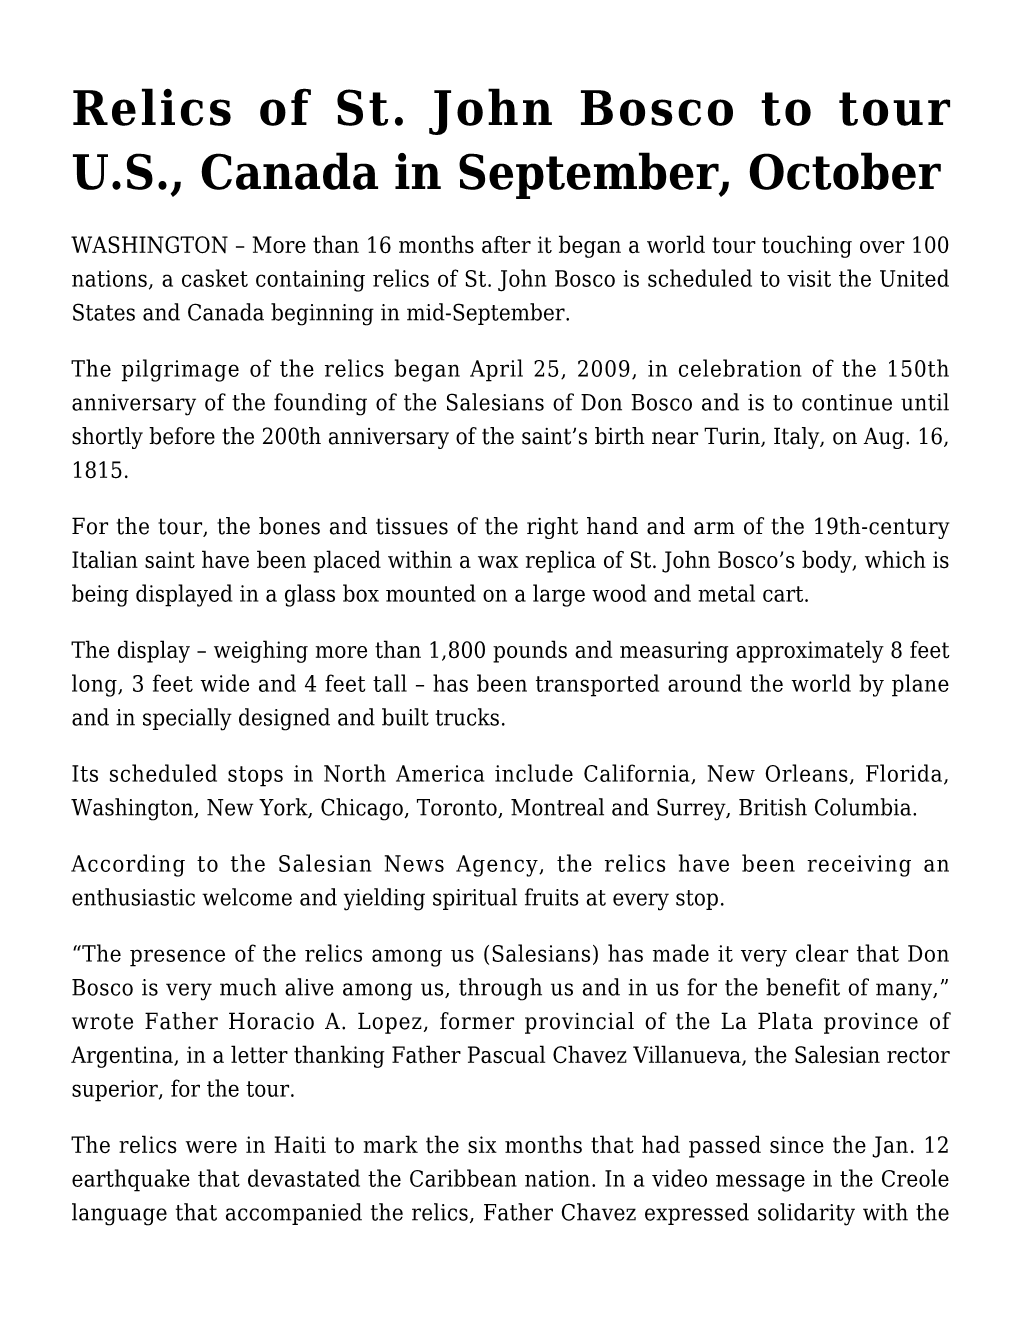 Relics of St. John Bosco to Tour U.S., Canada in September, October